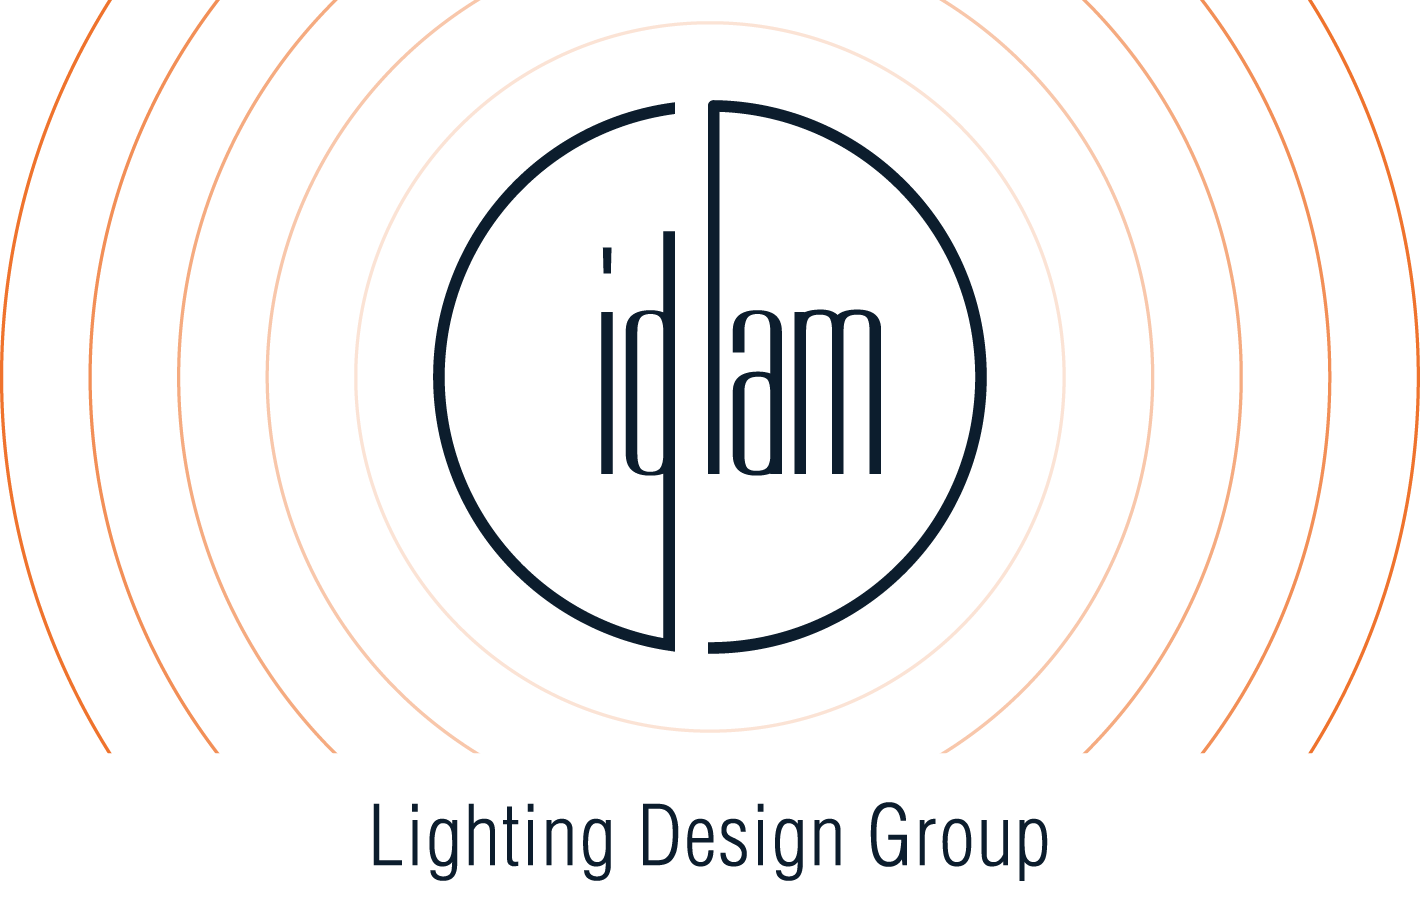 IDLAM lighting design group